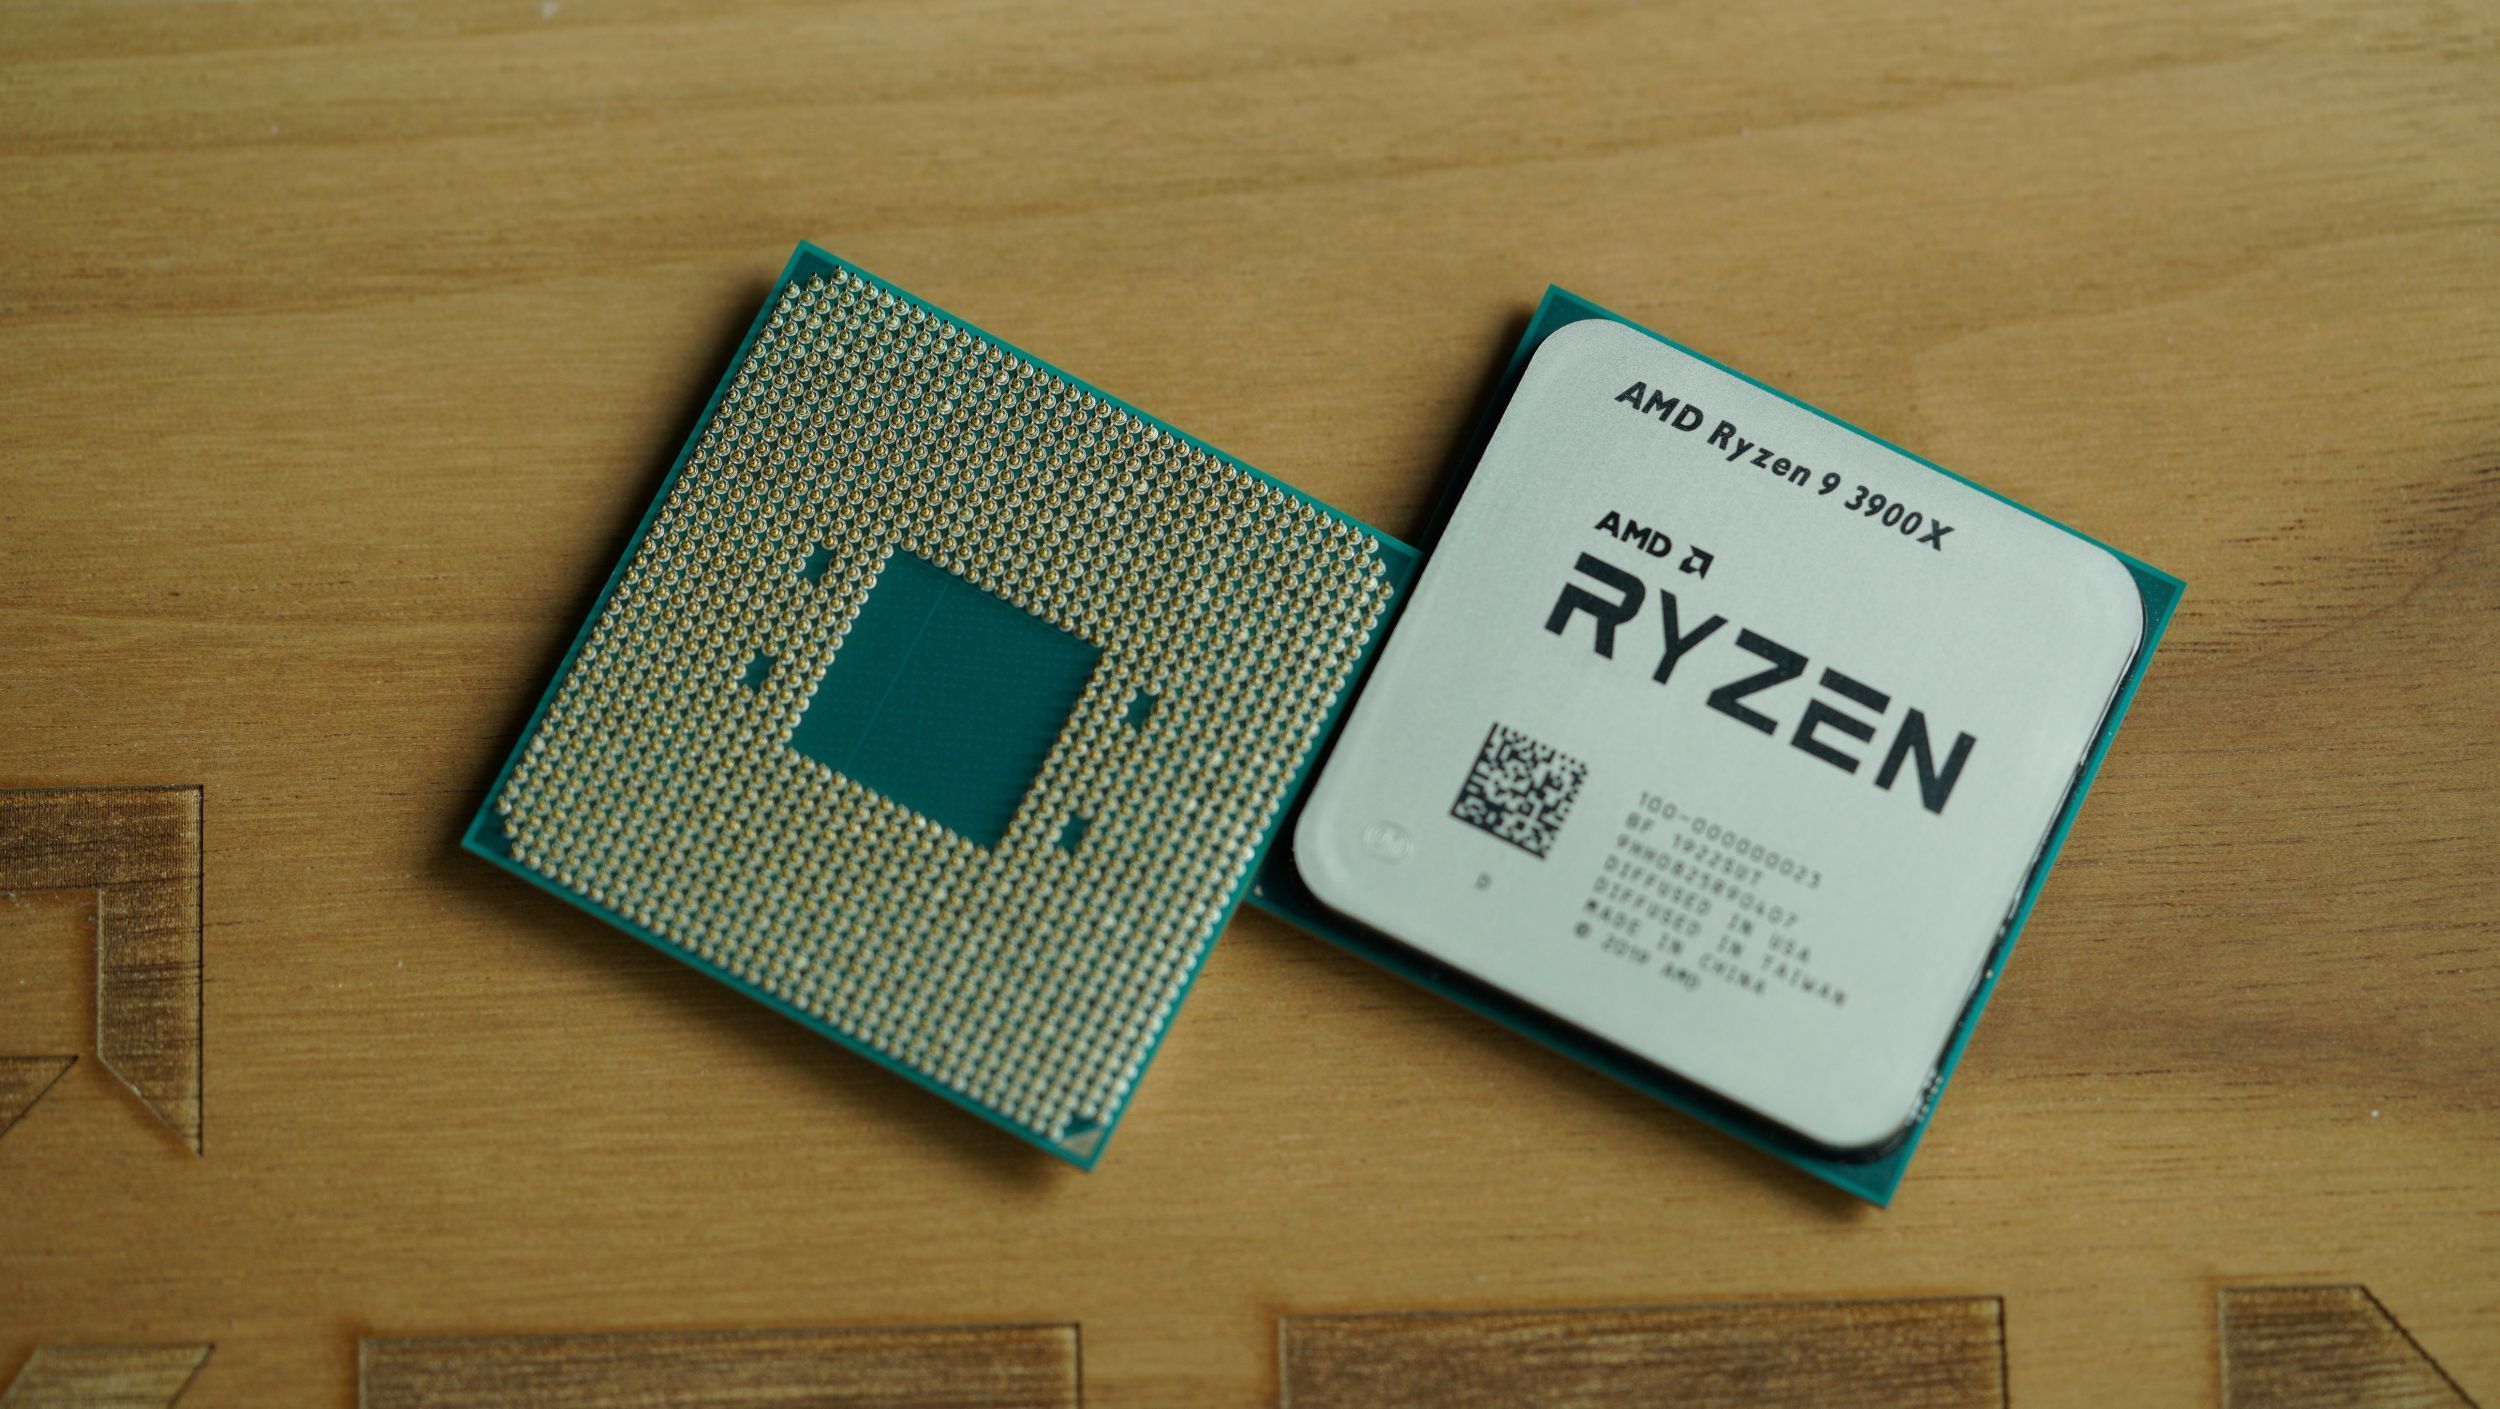 9 5900x купить. Процессор AMD Ryzen 9. Процессор AMD Ryzen 9 3900x. Процессор AMD Ryzen 9 5900x. AMD Ryzen 9 3900x 12-Core Processor.